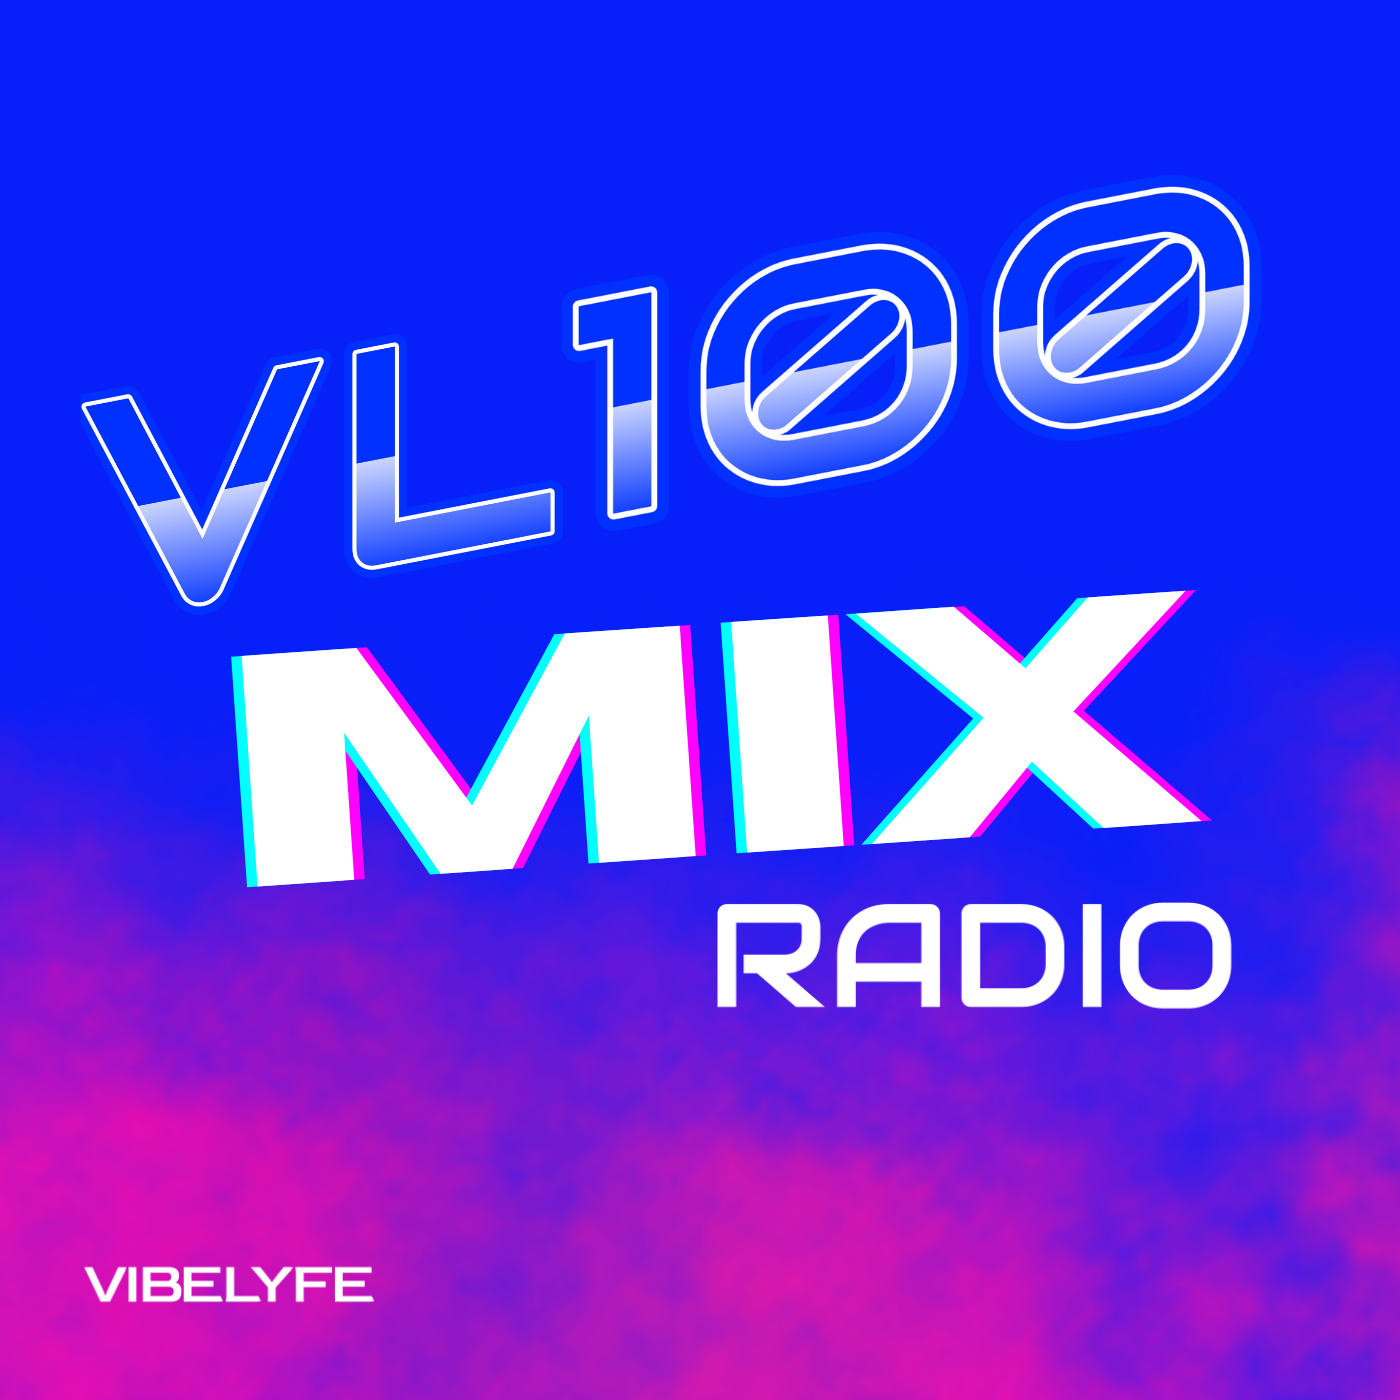 VL100 MIX Radio